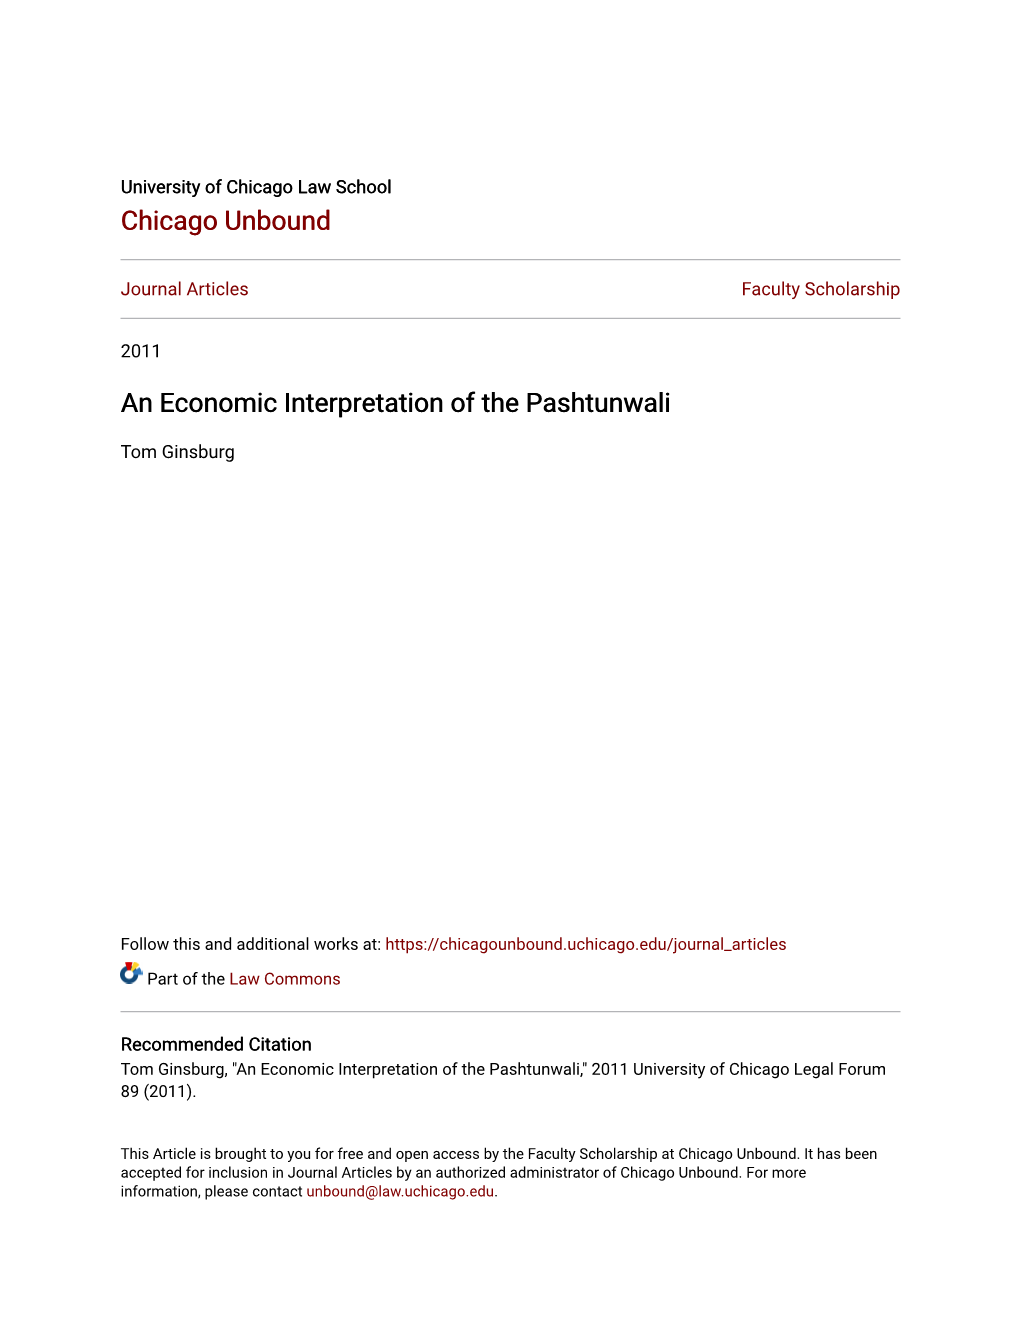 An Economic Interpretation of the Pashtunwali